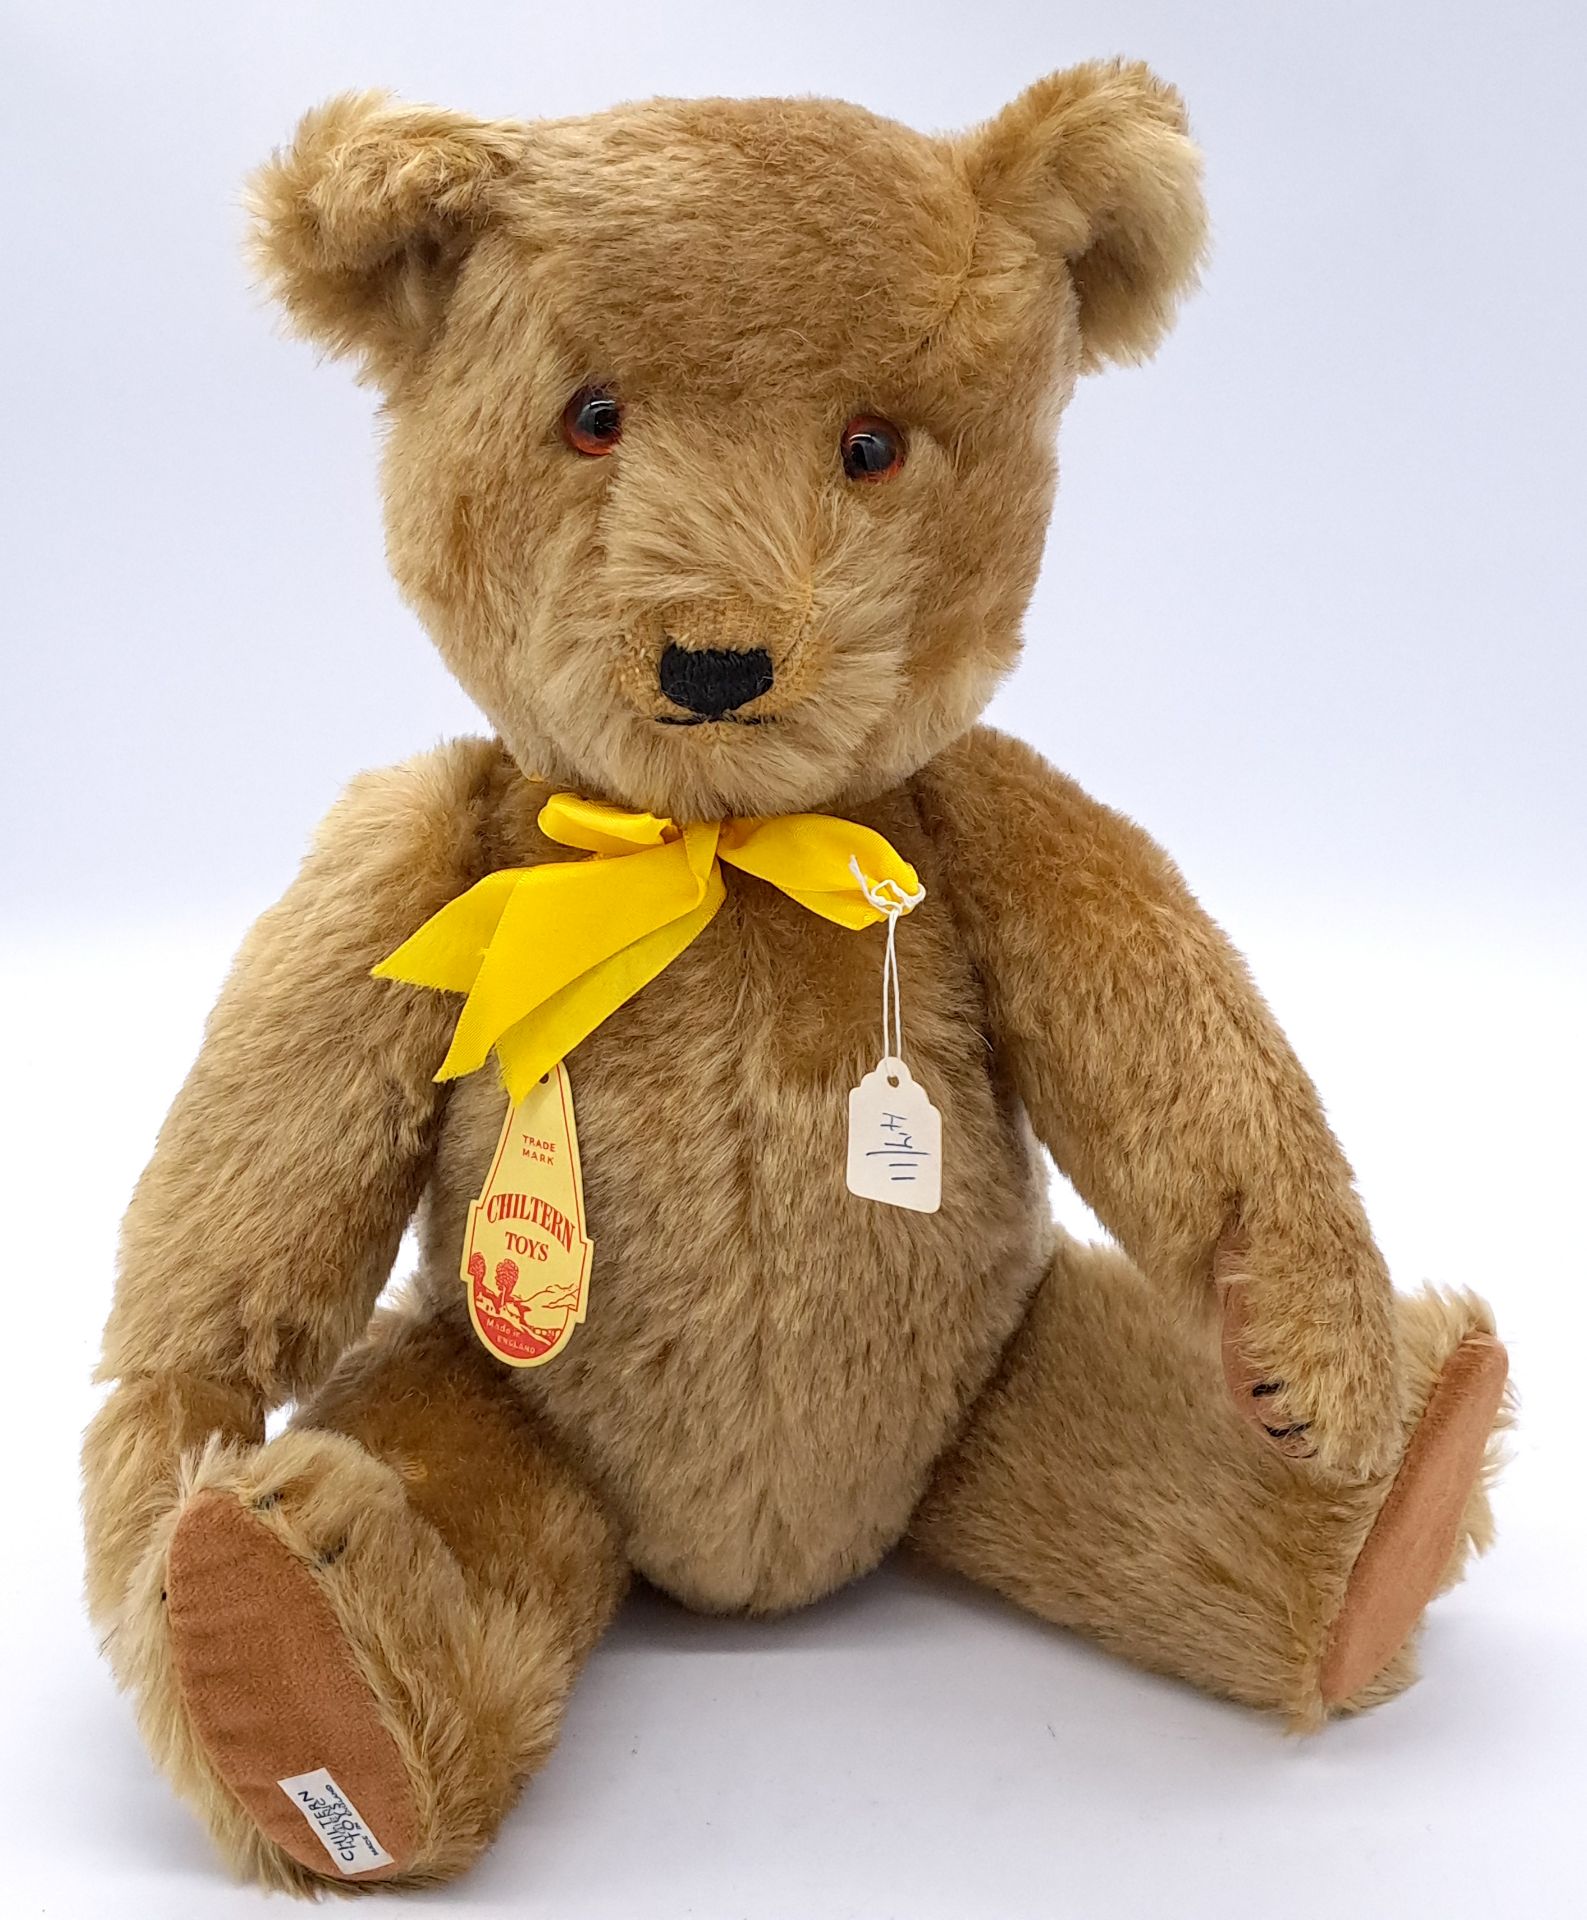 Chiltern vintage Hugmee teddy bear